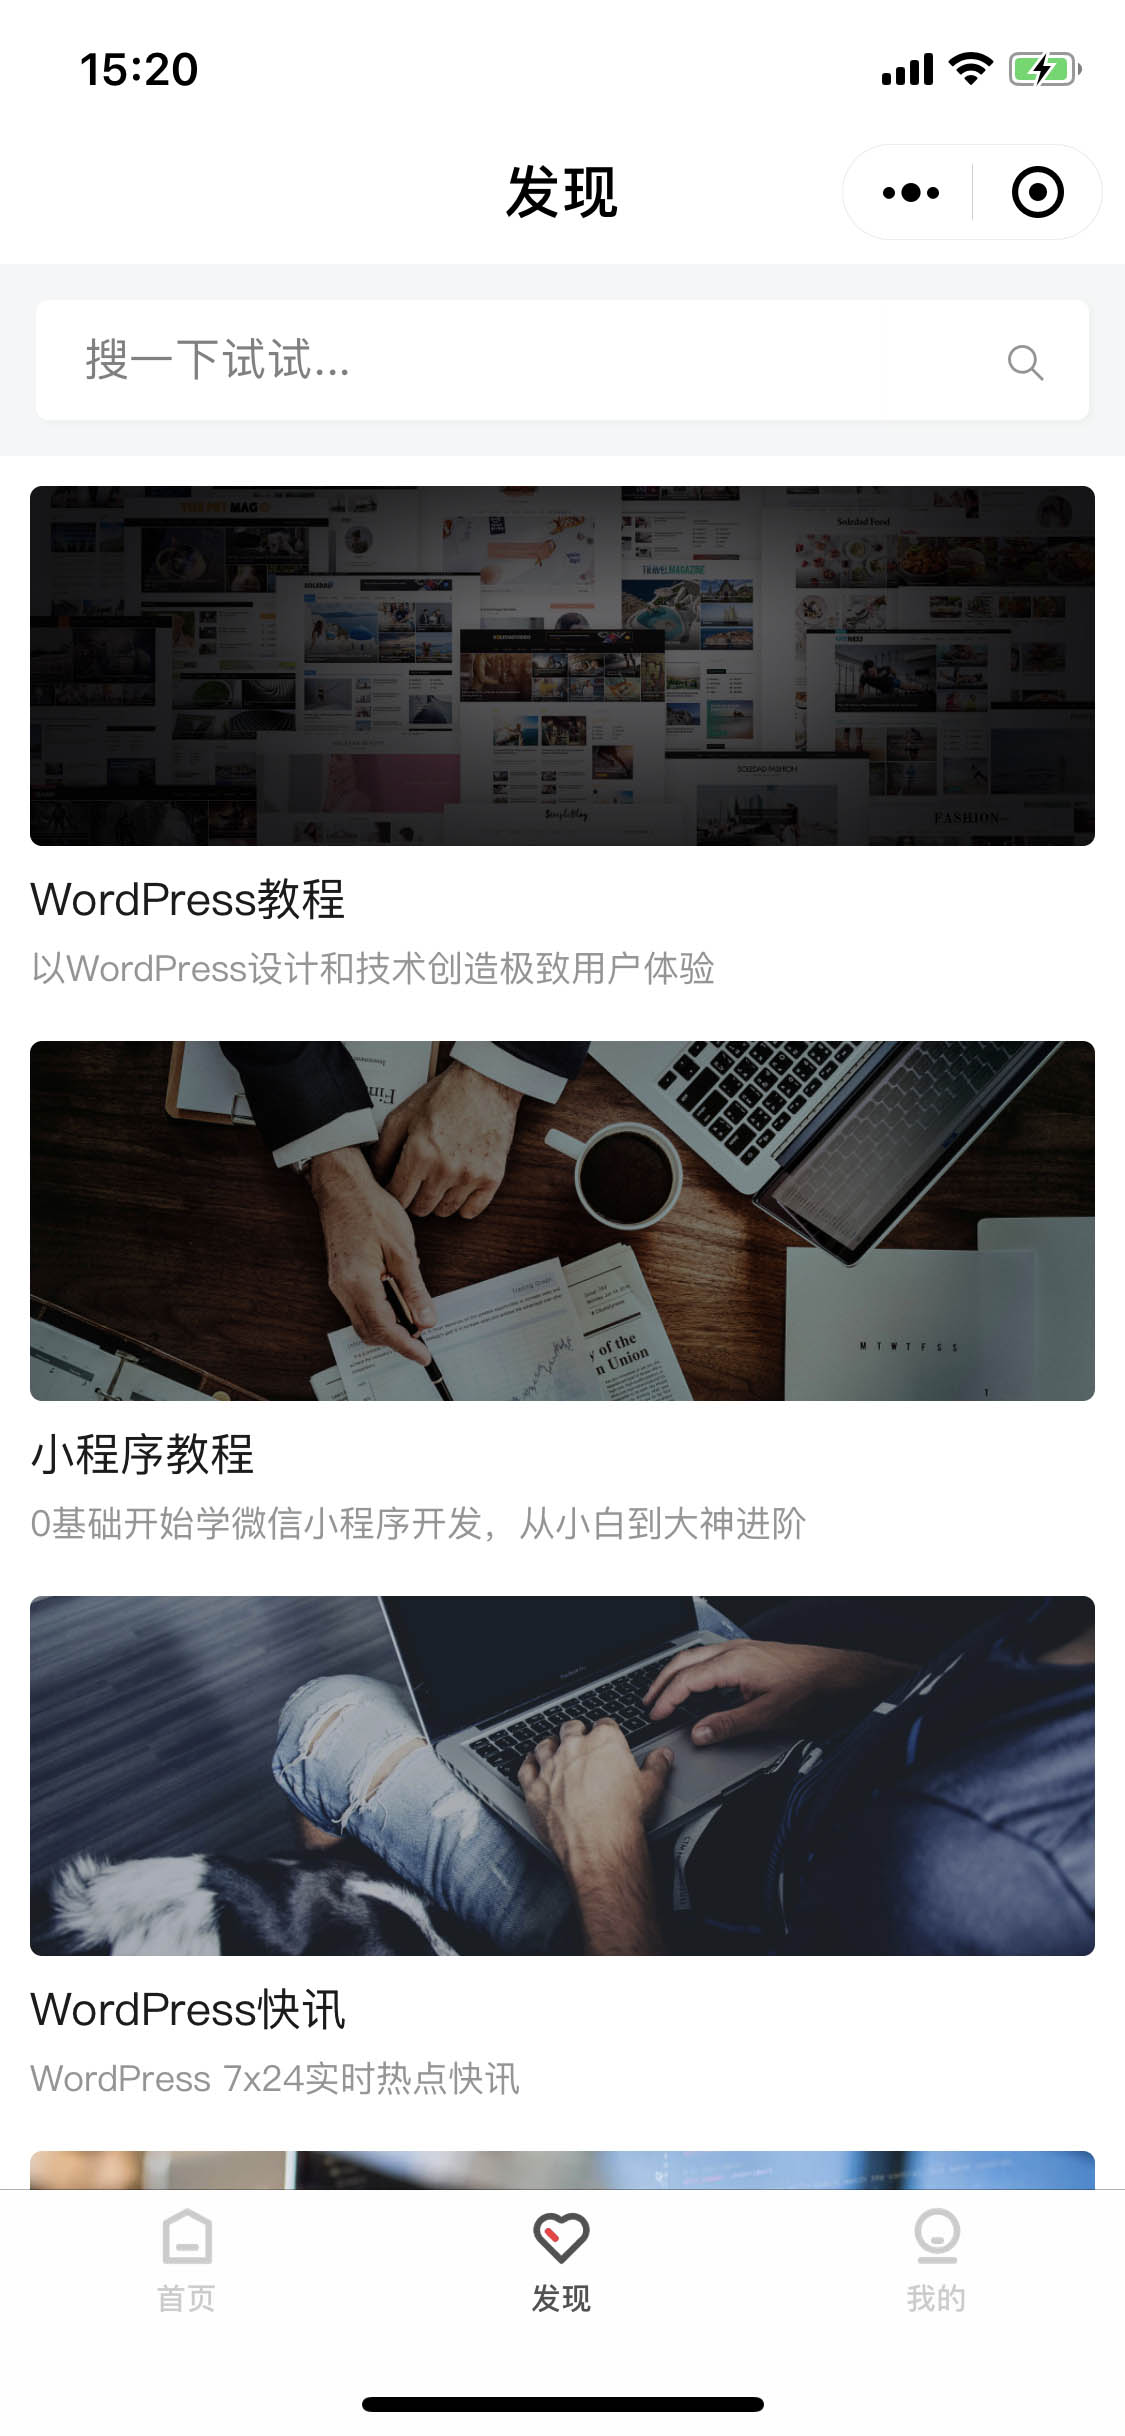 WordPress中文网